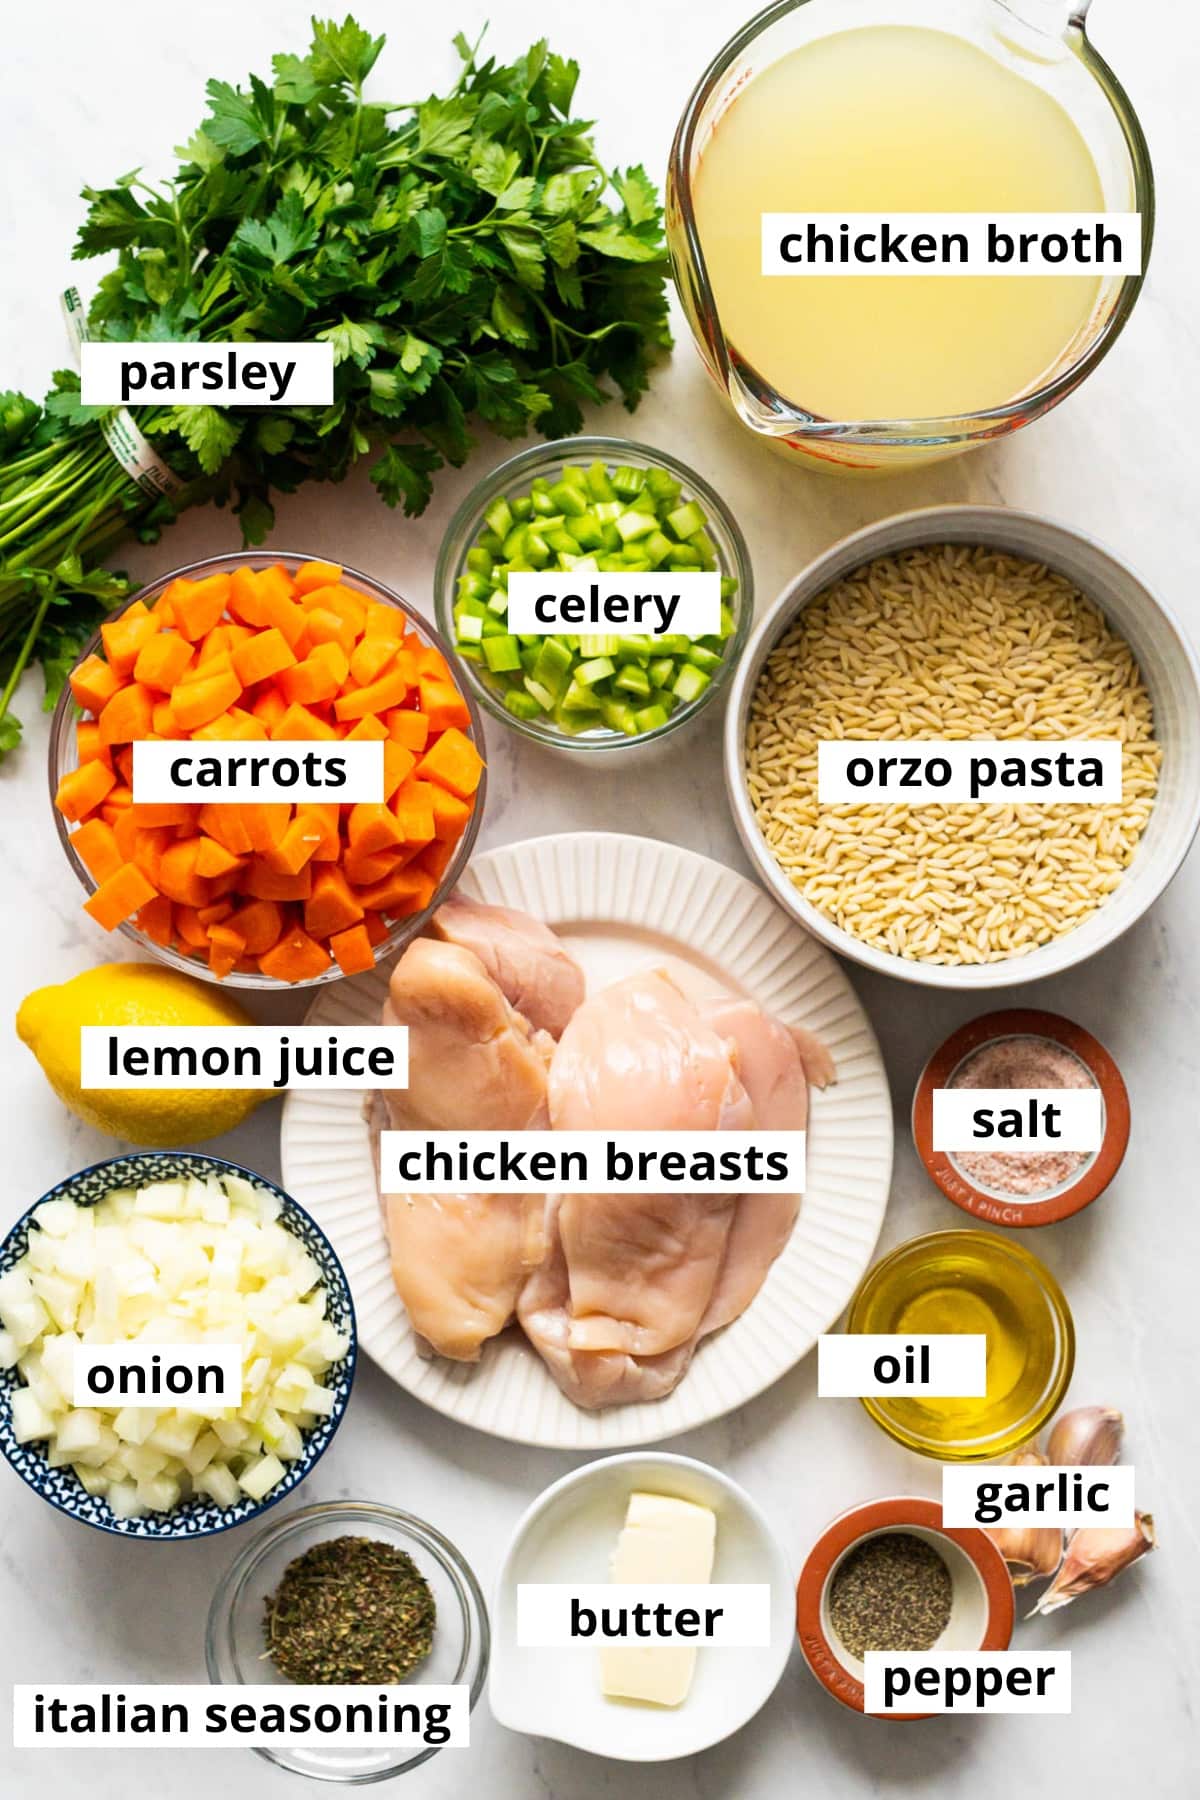 Chicken breasts, chicken broth, orzo pasta, carrots, celery, onion, garlic, parsley, lemon, butter, Italian seasoning, oil, salt and pepper.